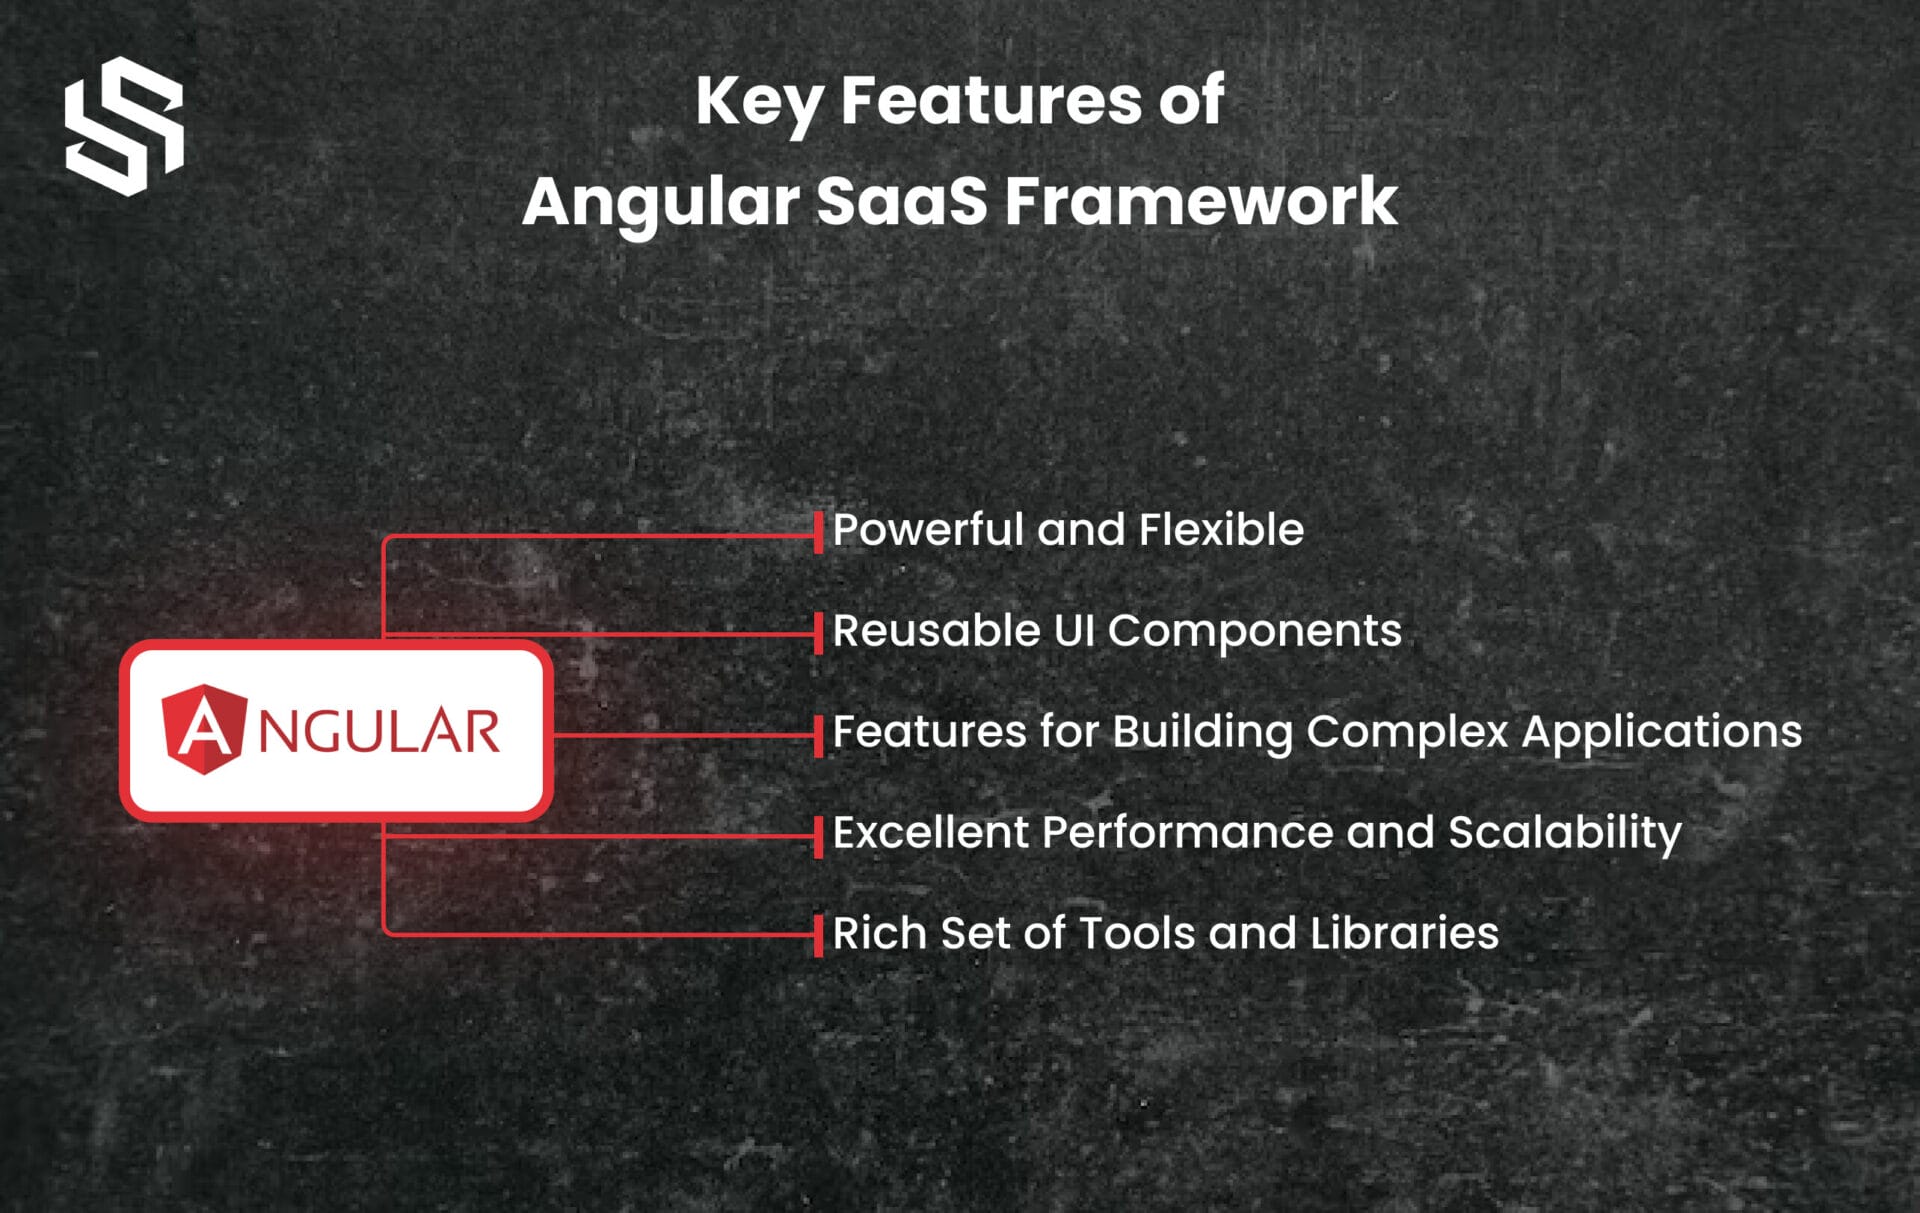 Key Features of Angular Framework